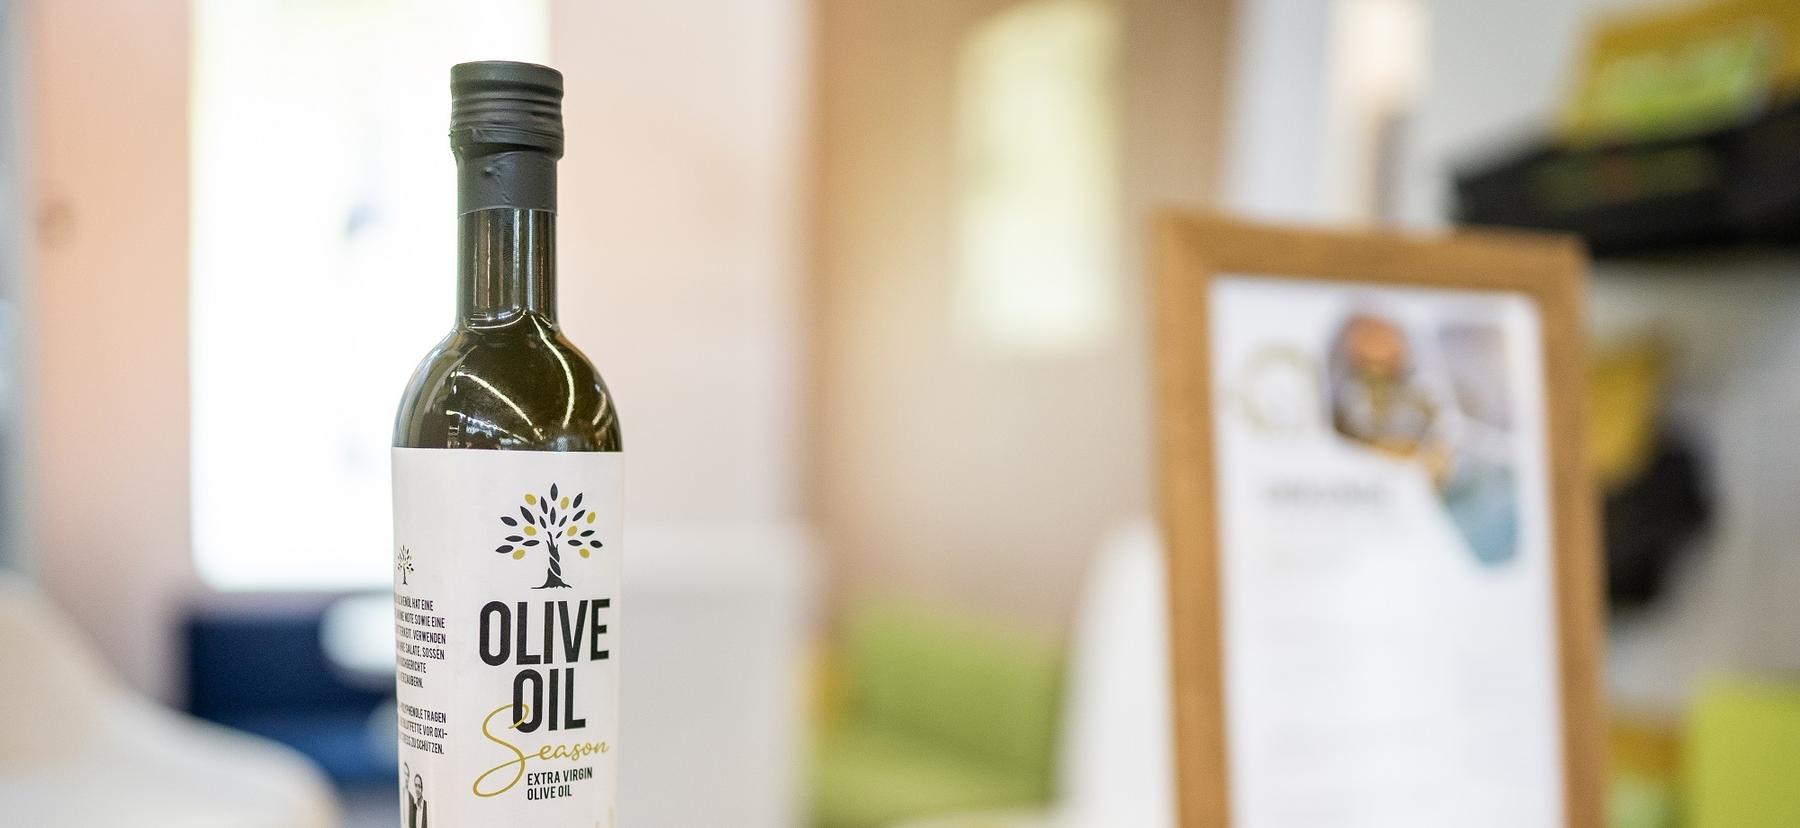 Kontaktieren Sie uns gerne - Olive Oil Season